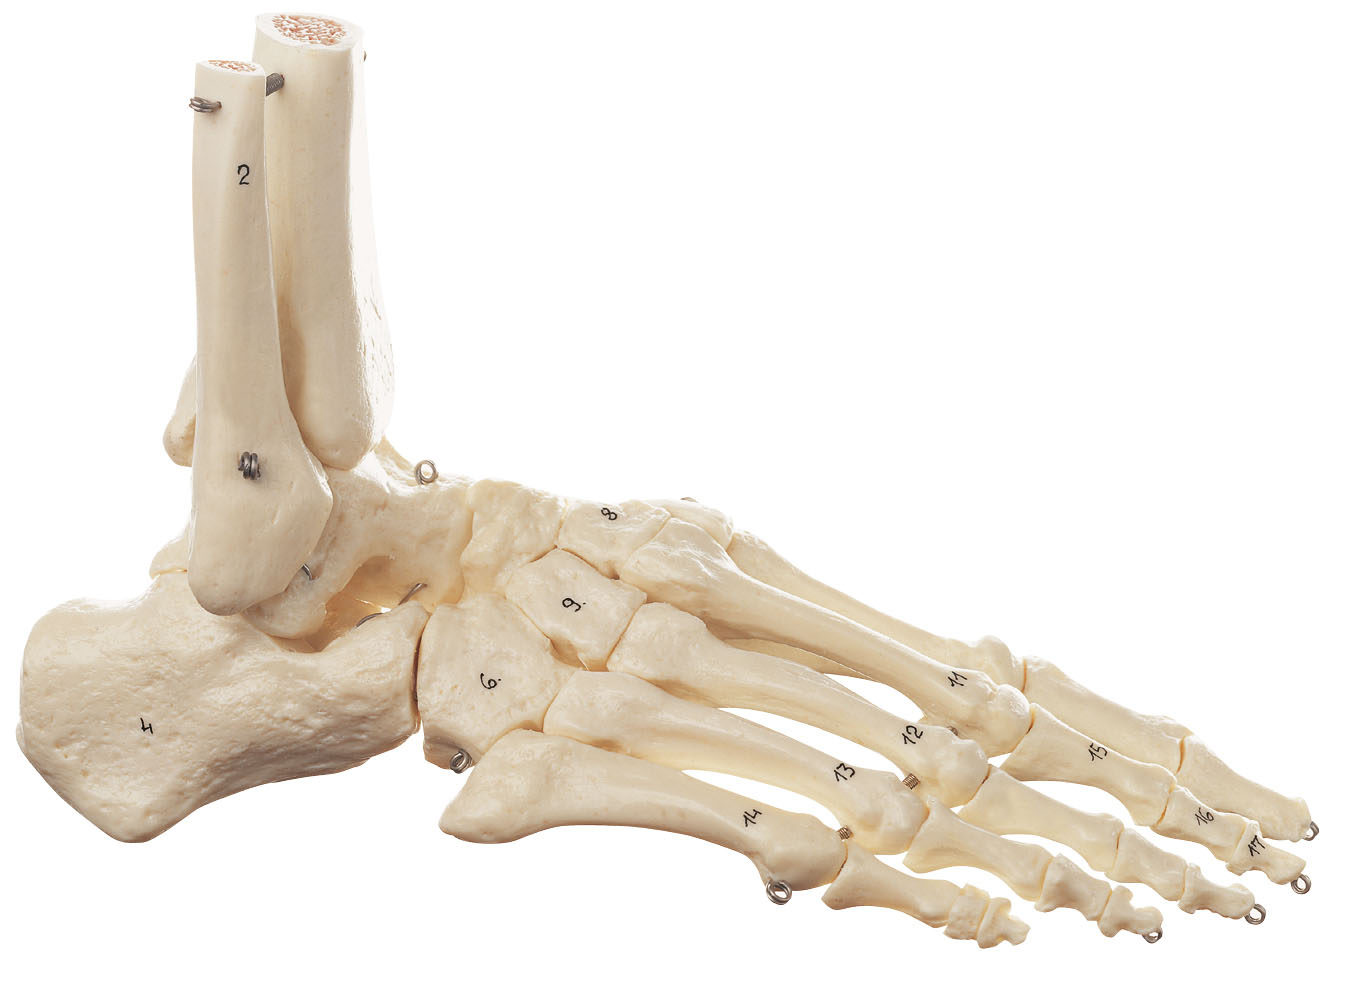 Skeleton of Foot (Flexible Mounting)